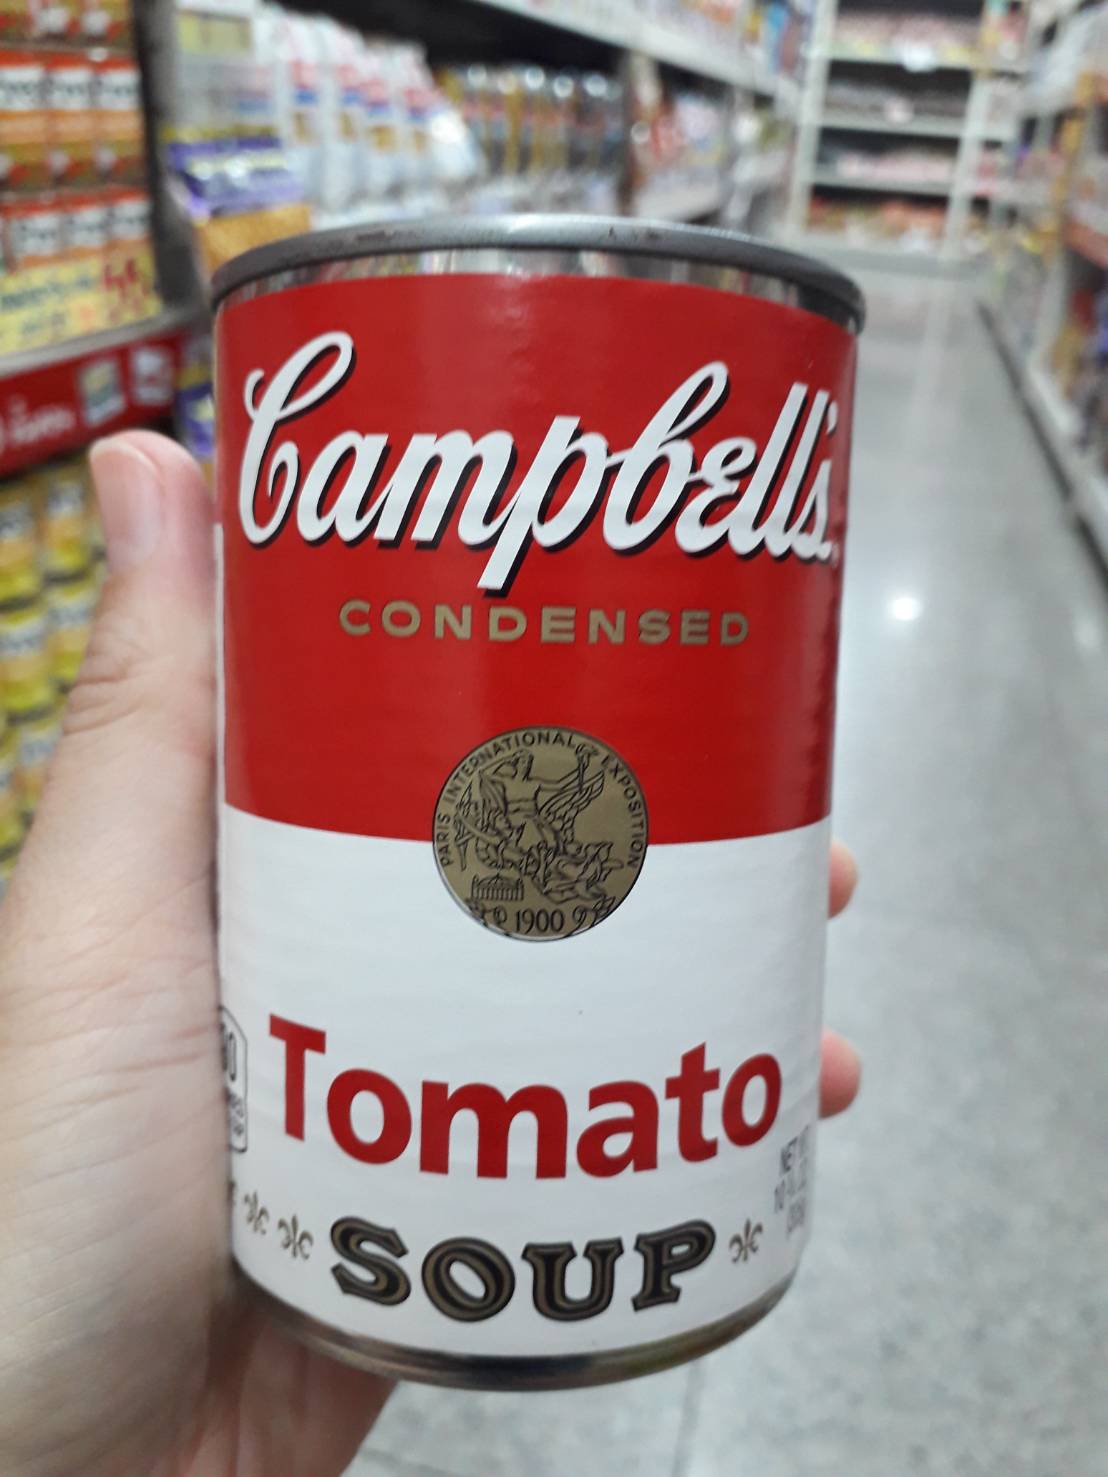 campbell's condensed soup tomato soup แคมเบลล์ ซุปมะเขือเทศชนิดเข้มข้น กึ่งสำเร็จรูป 305g